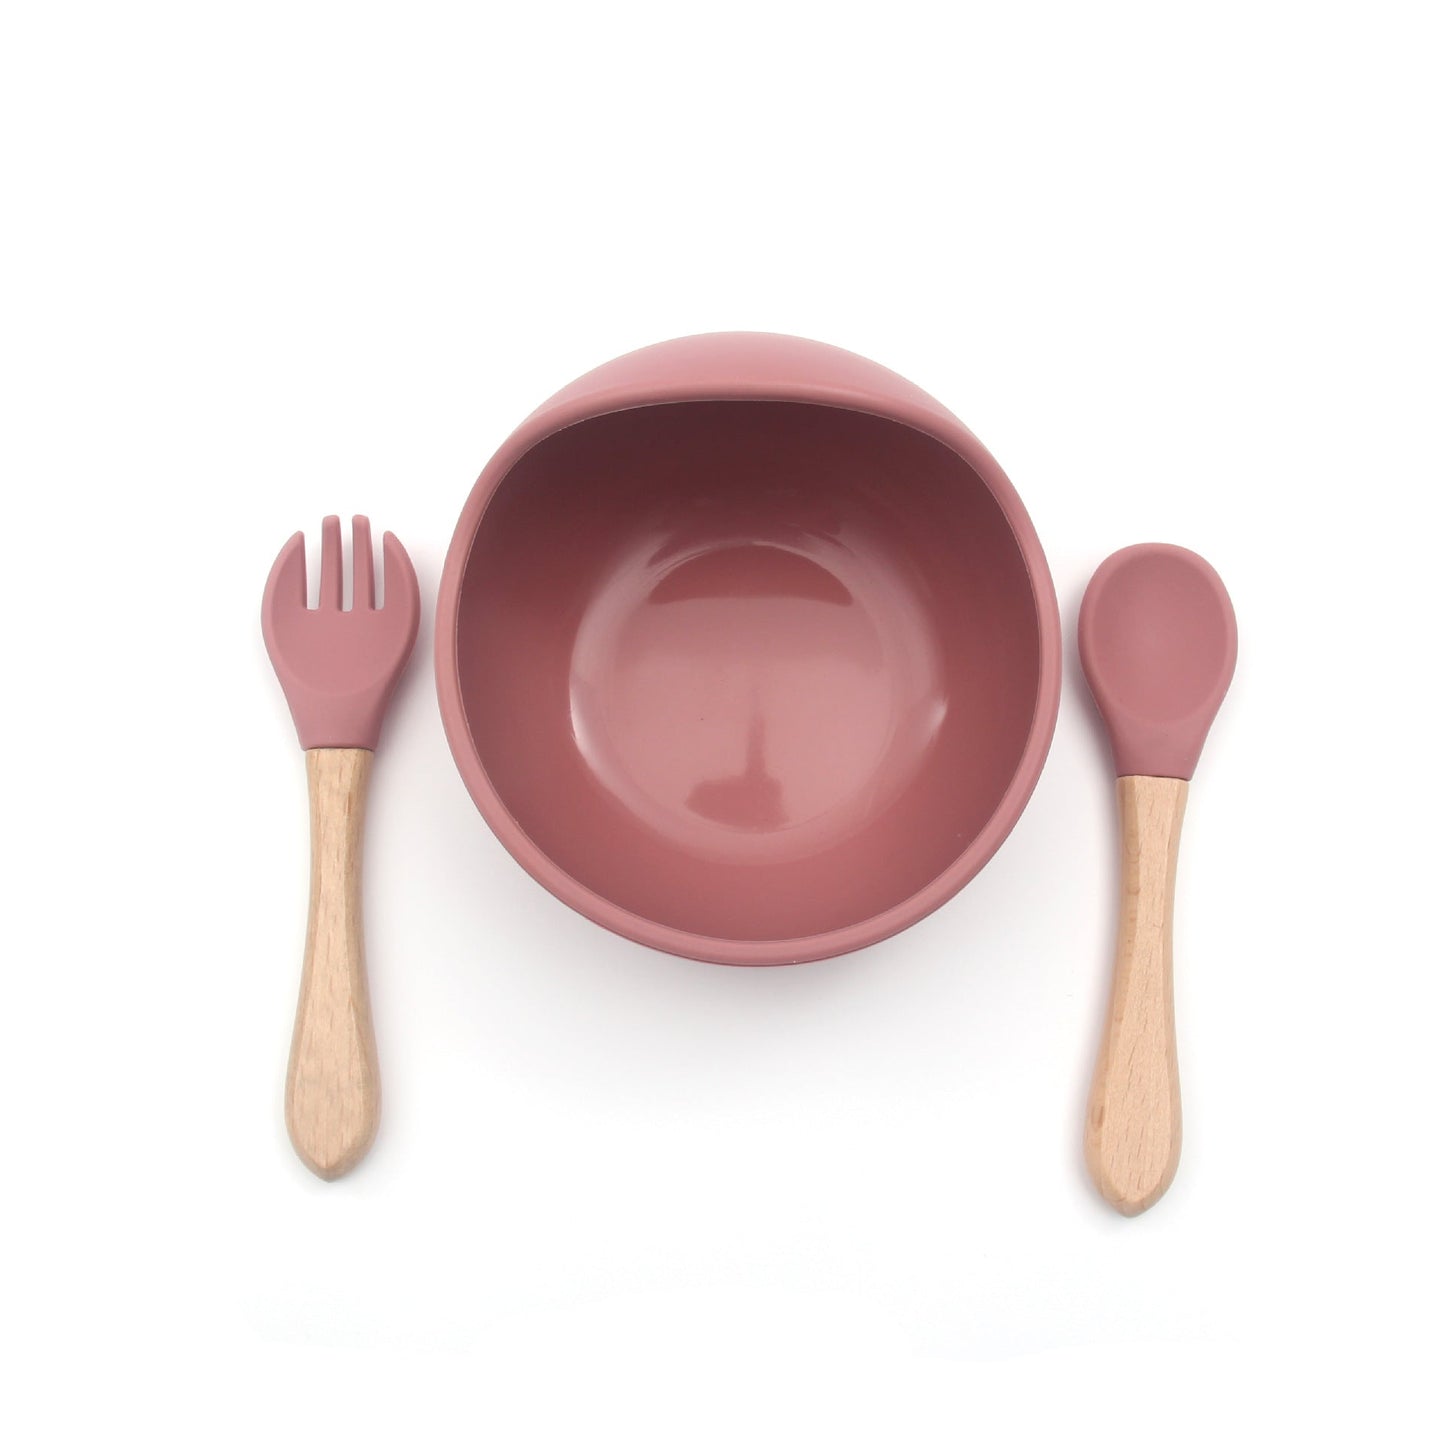 Dark Pink Tableware 3pc Set - includes bowl, fork & spoon